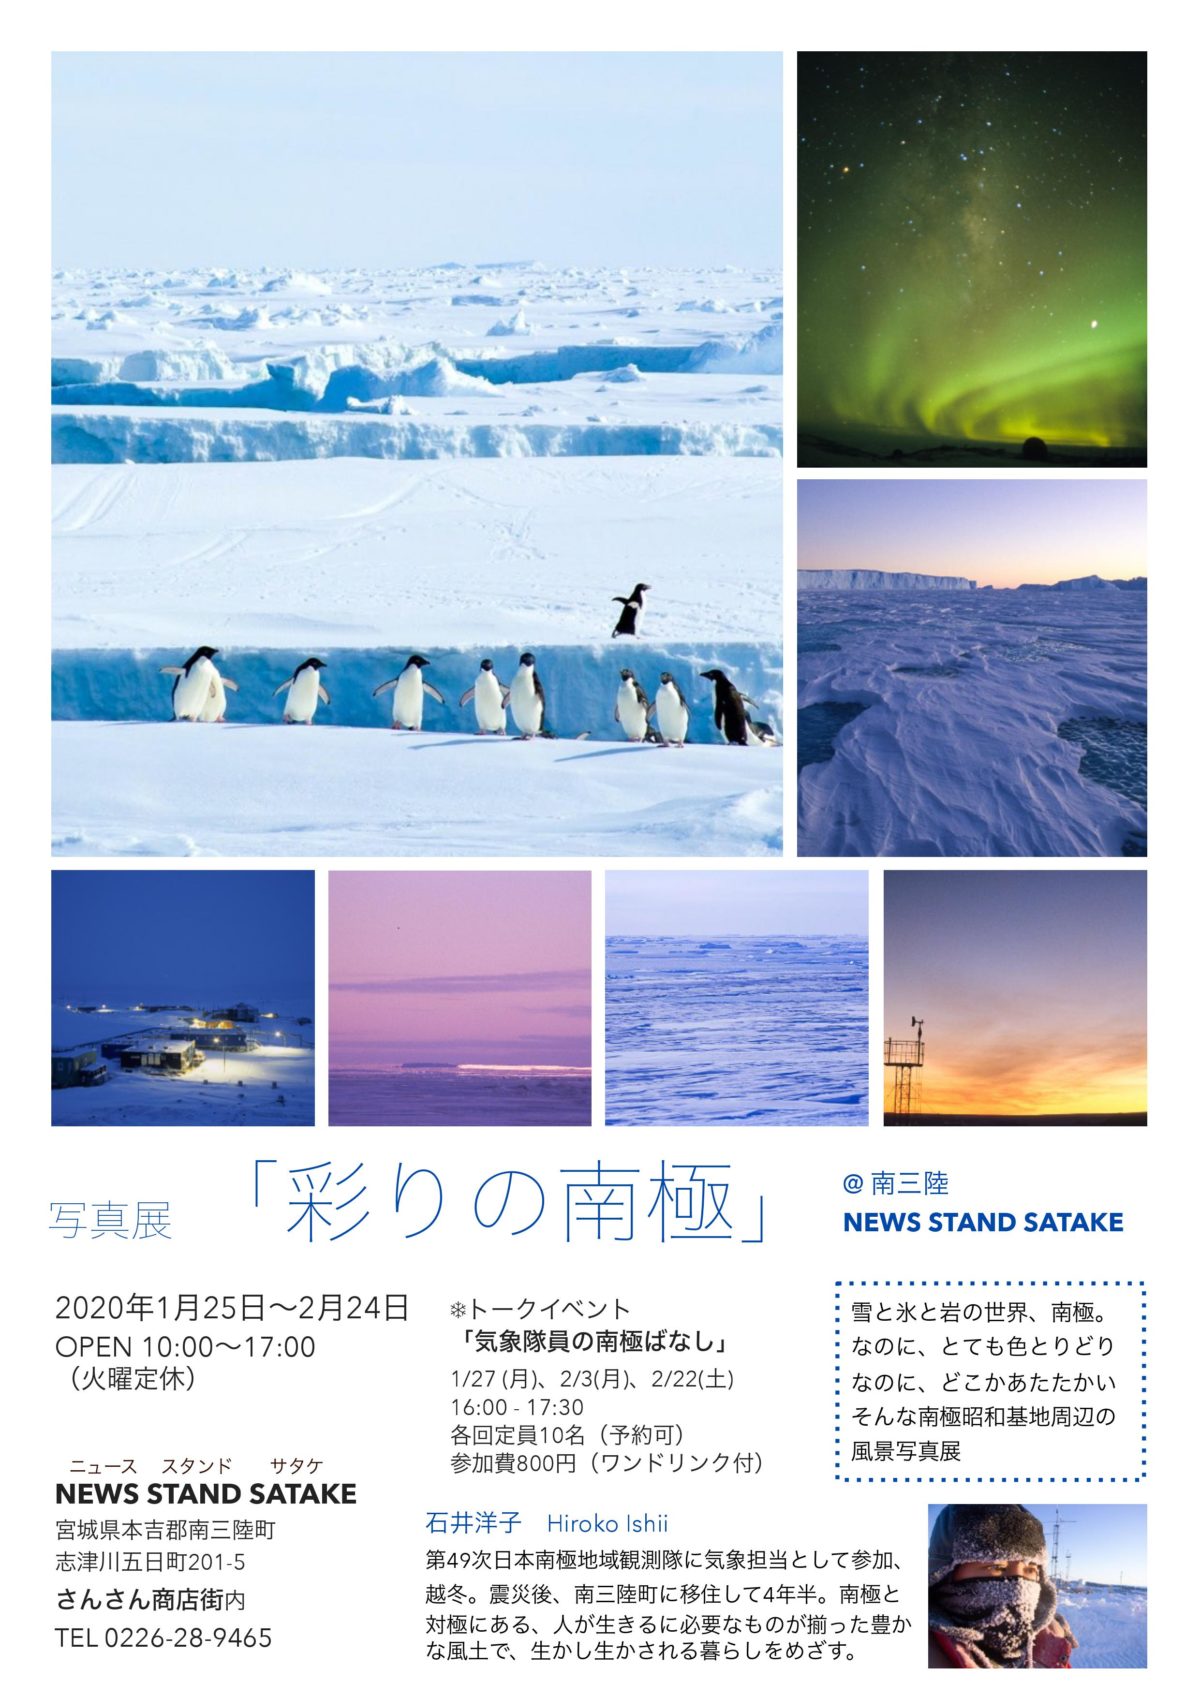 ”NEWS STAND SATAKE”にて写真展「彩りの南極」開催中！本日トークイベントも開催されます！